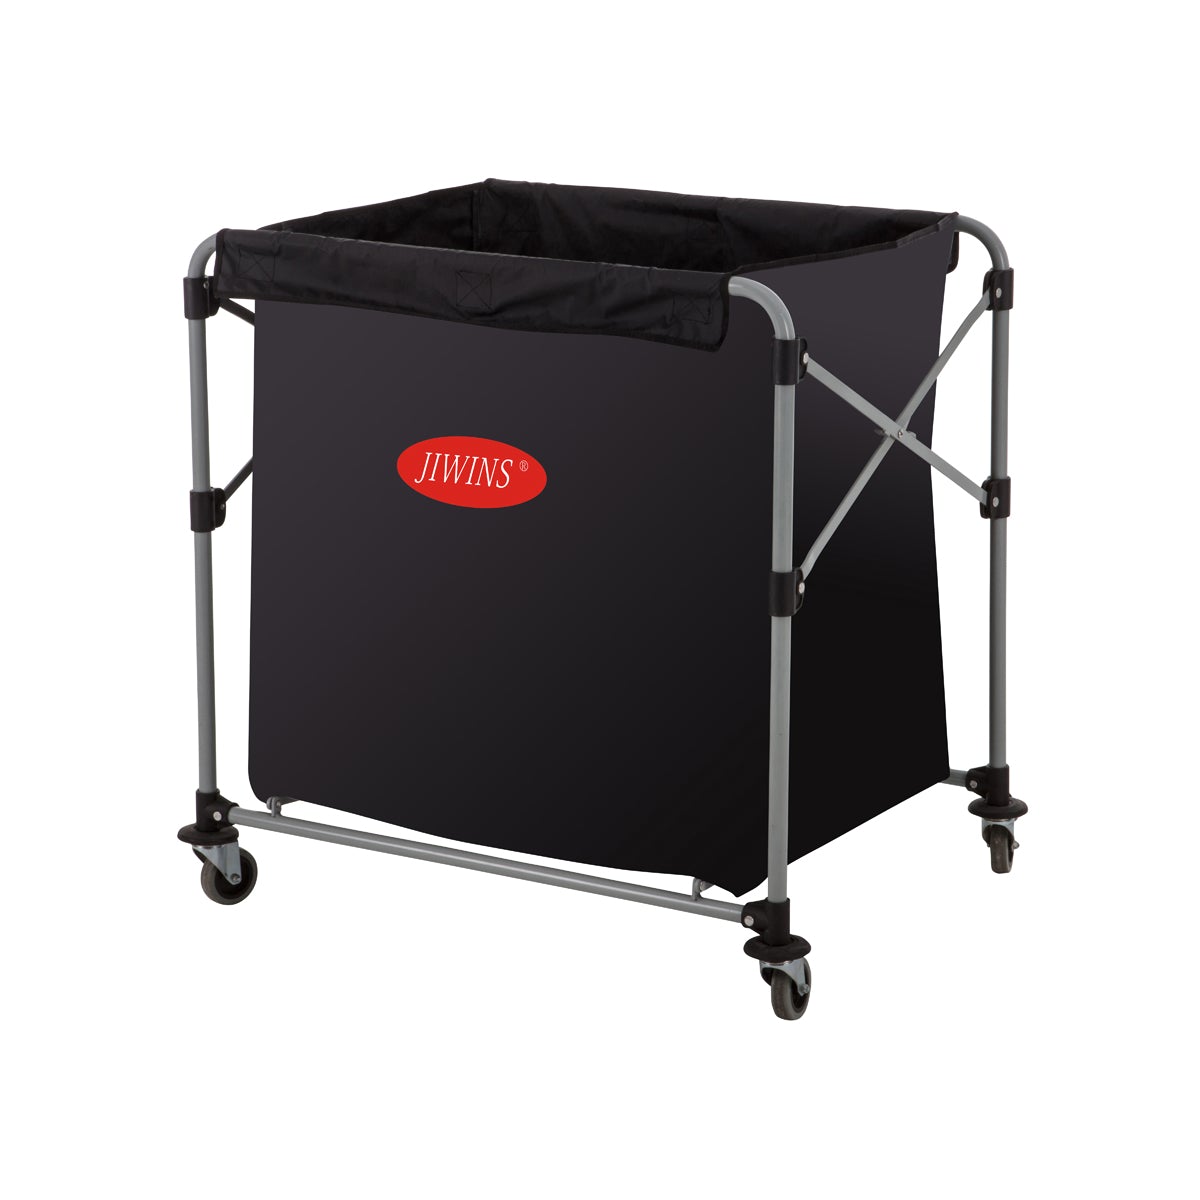 JW-XC300 Jiwins Collapsible Laundry Cart with 300Lt Vinyl Bag Tomkin Australia Hospitality Supplies